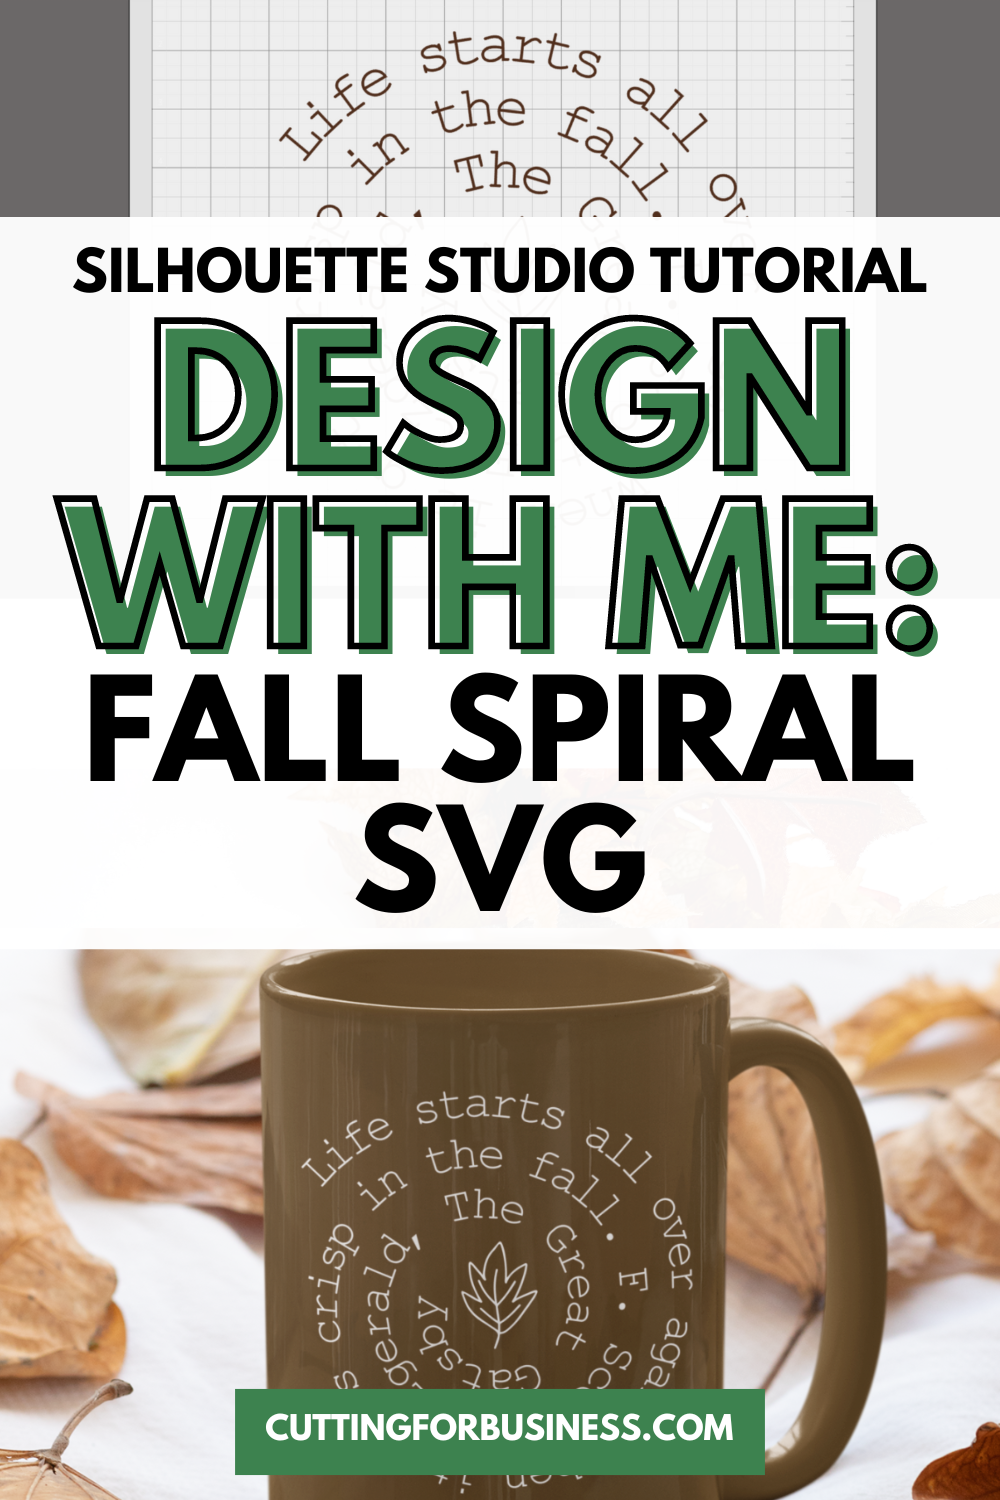 Silhouette Studio Tutorial: Fall Spiral SVG - cuttingforbusiness.com